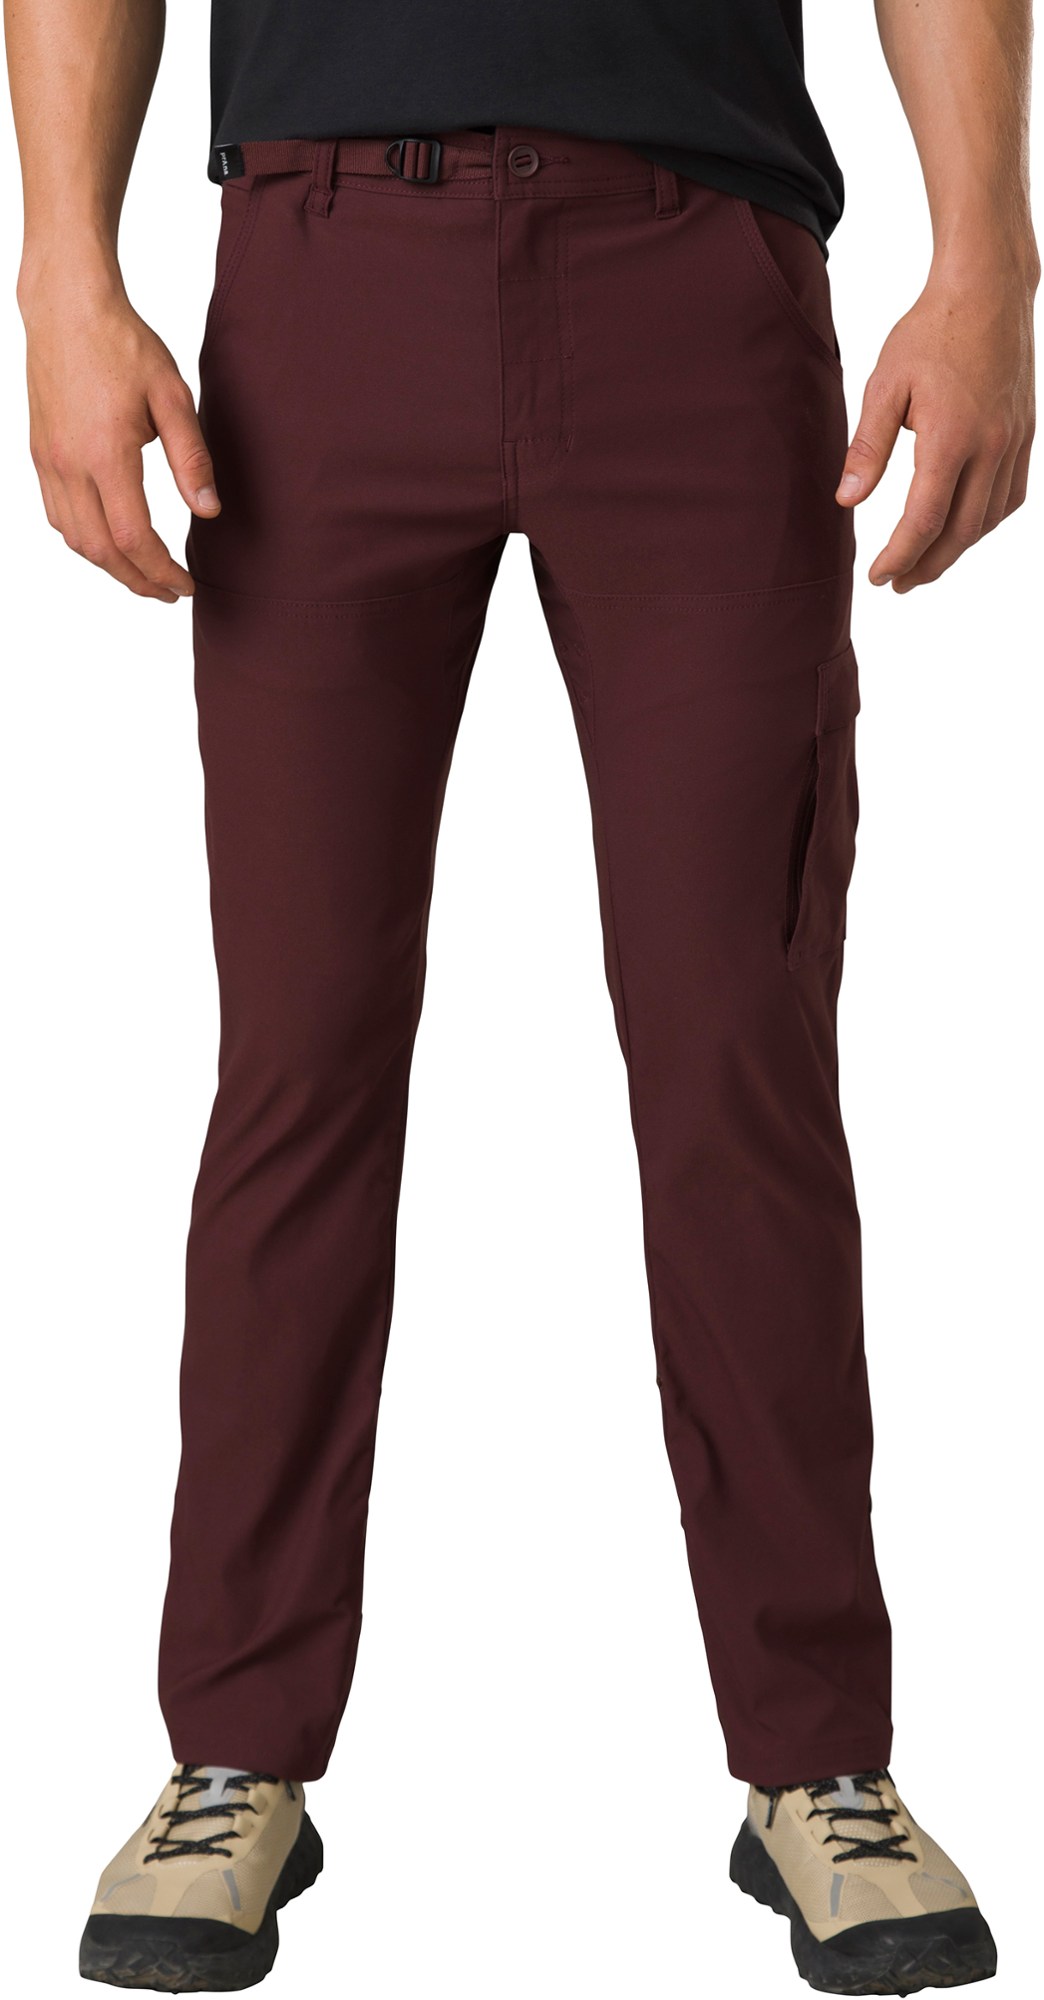 Узкие брюки Stretch Zion II — мужские prAna, коричневый